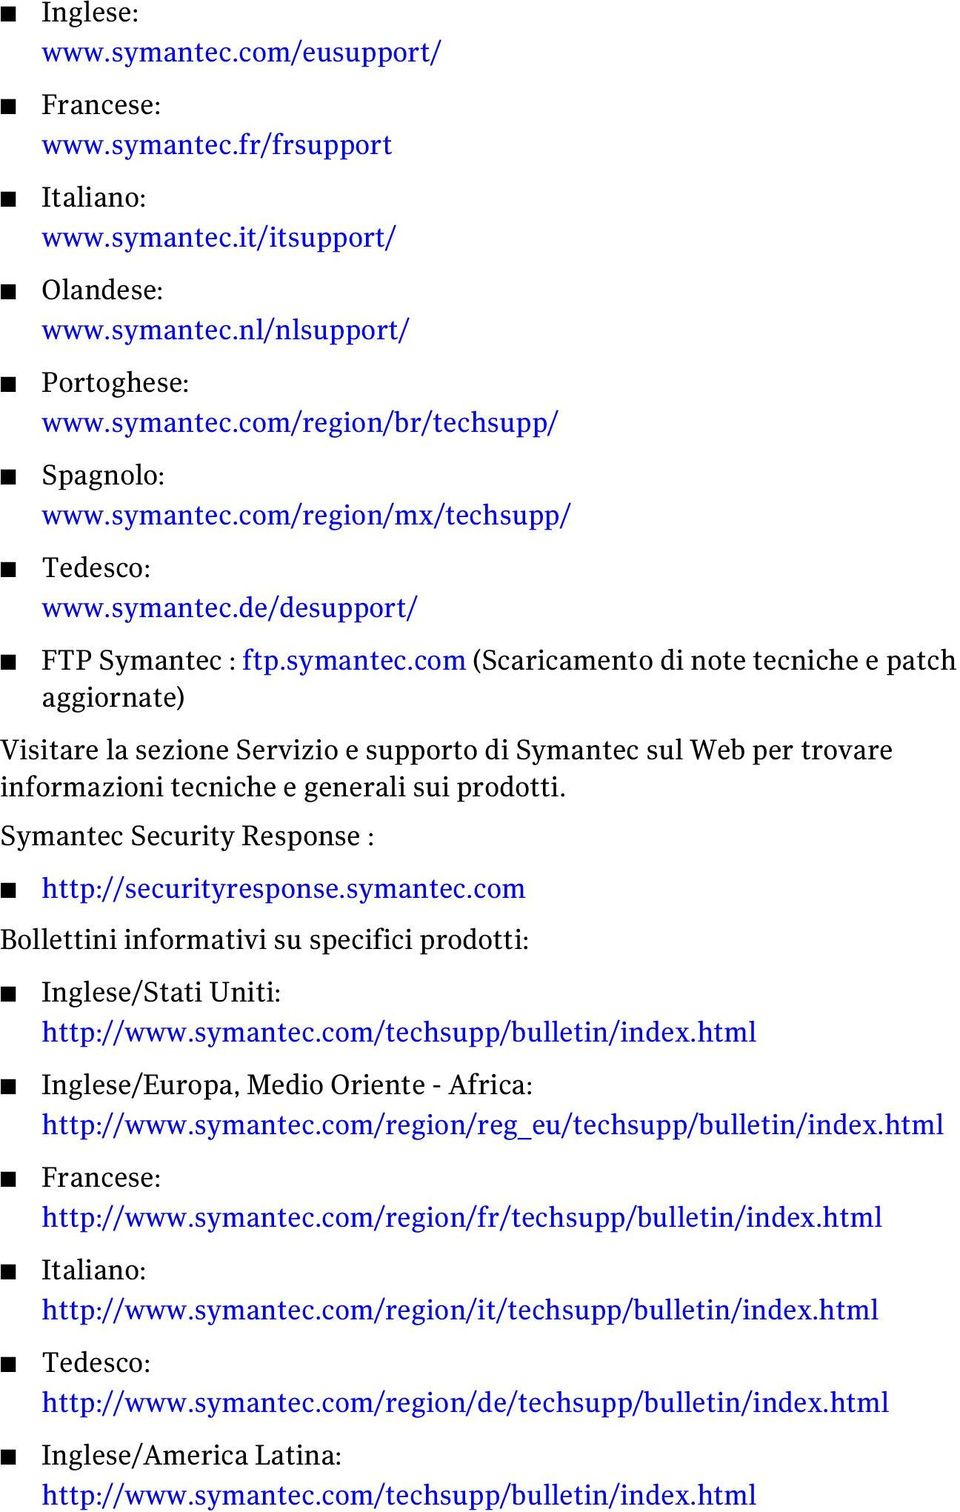 Symantec Security Response : http://securityresponse.symantec.com Bollettini informativi su specifici prodotti: Inglese/Stati Uniti: http://www.symantec.com/techsupp/bulletin/index.